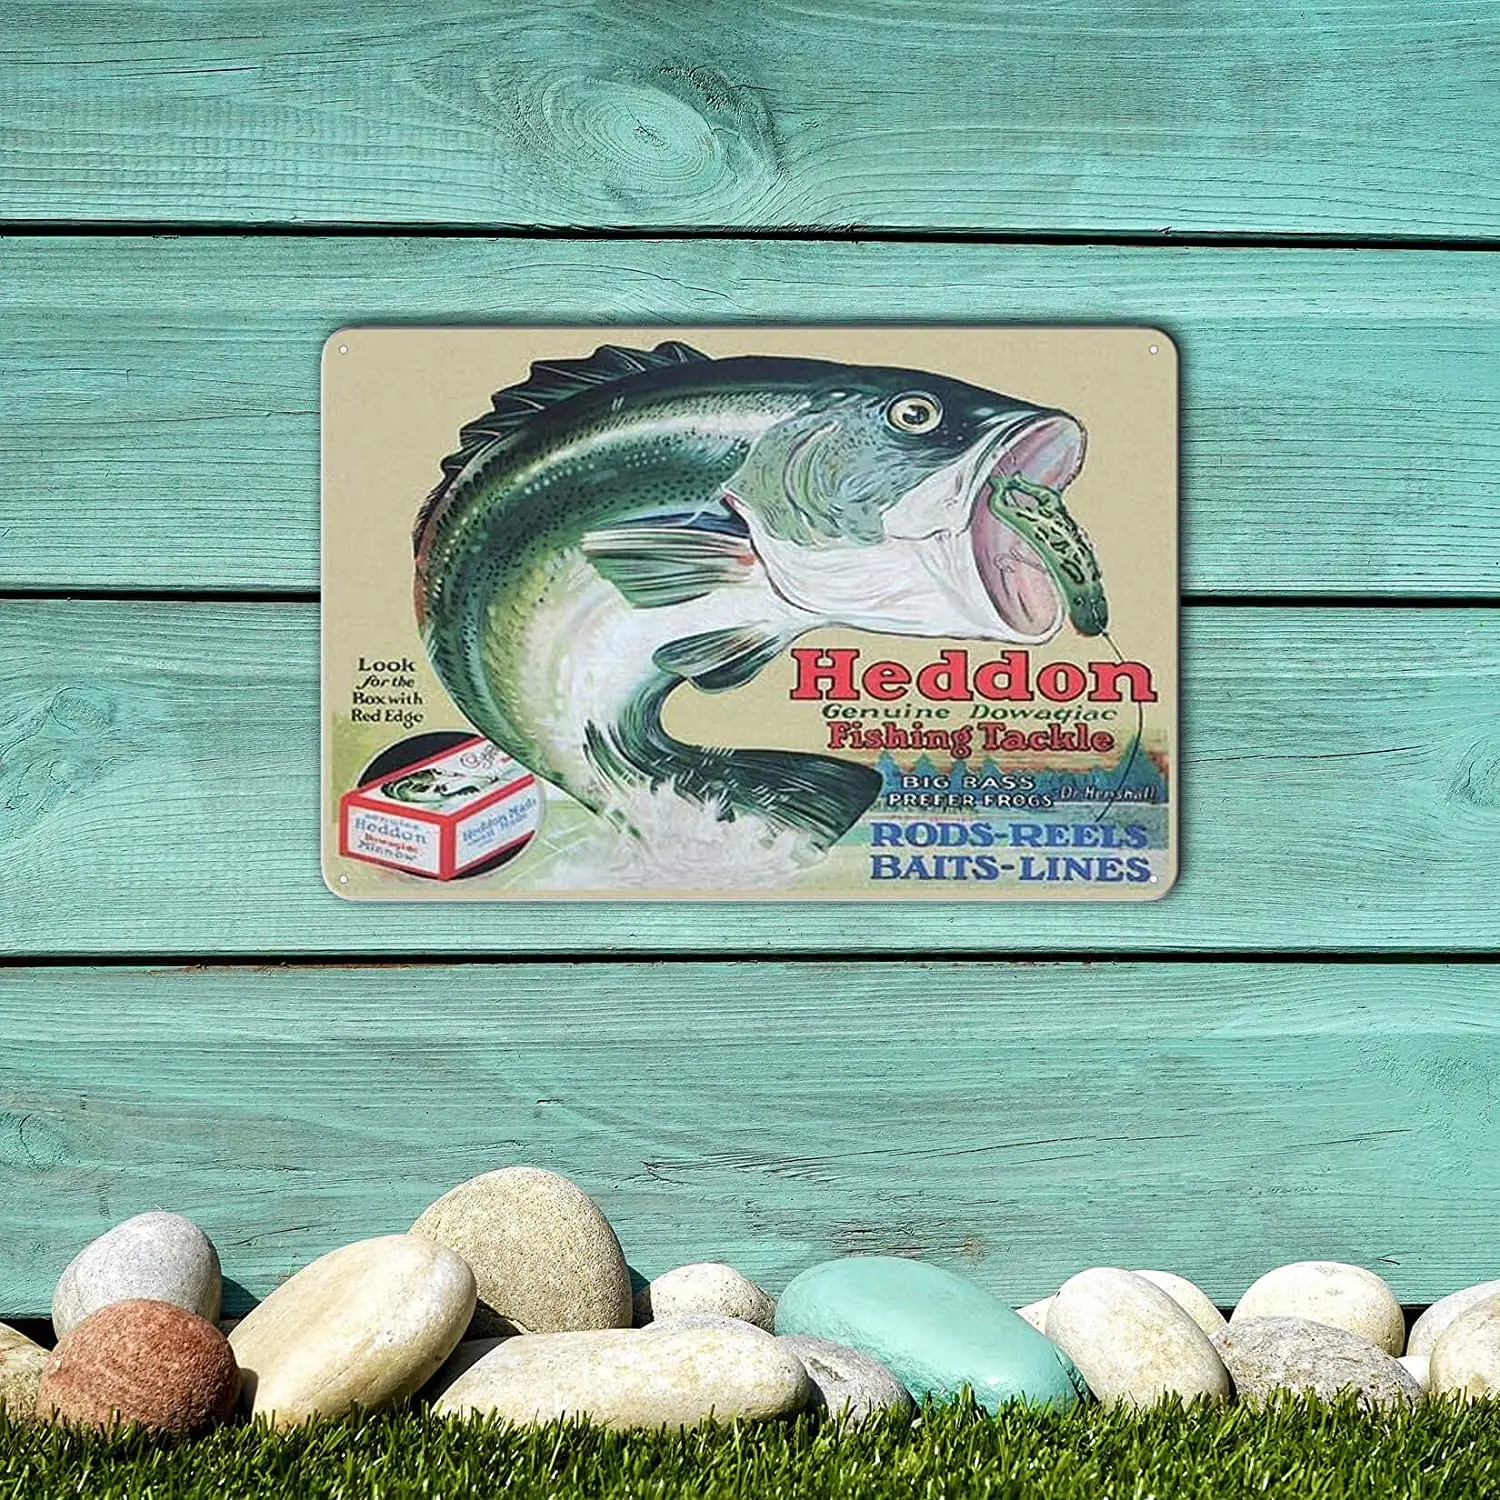 HEDDON Genuine Dowagiac Fishing Tackle Vintage Tin Metal Sign 